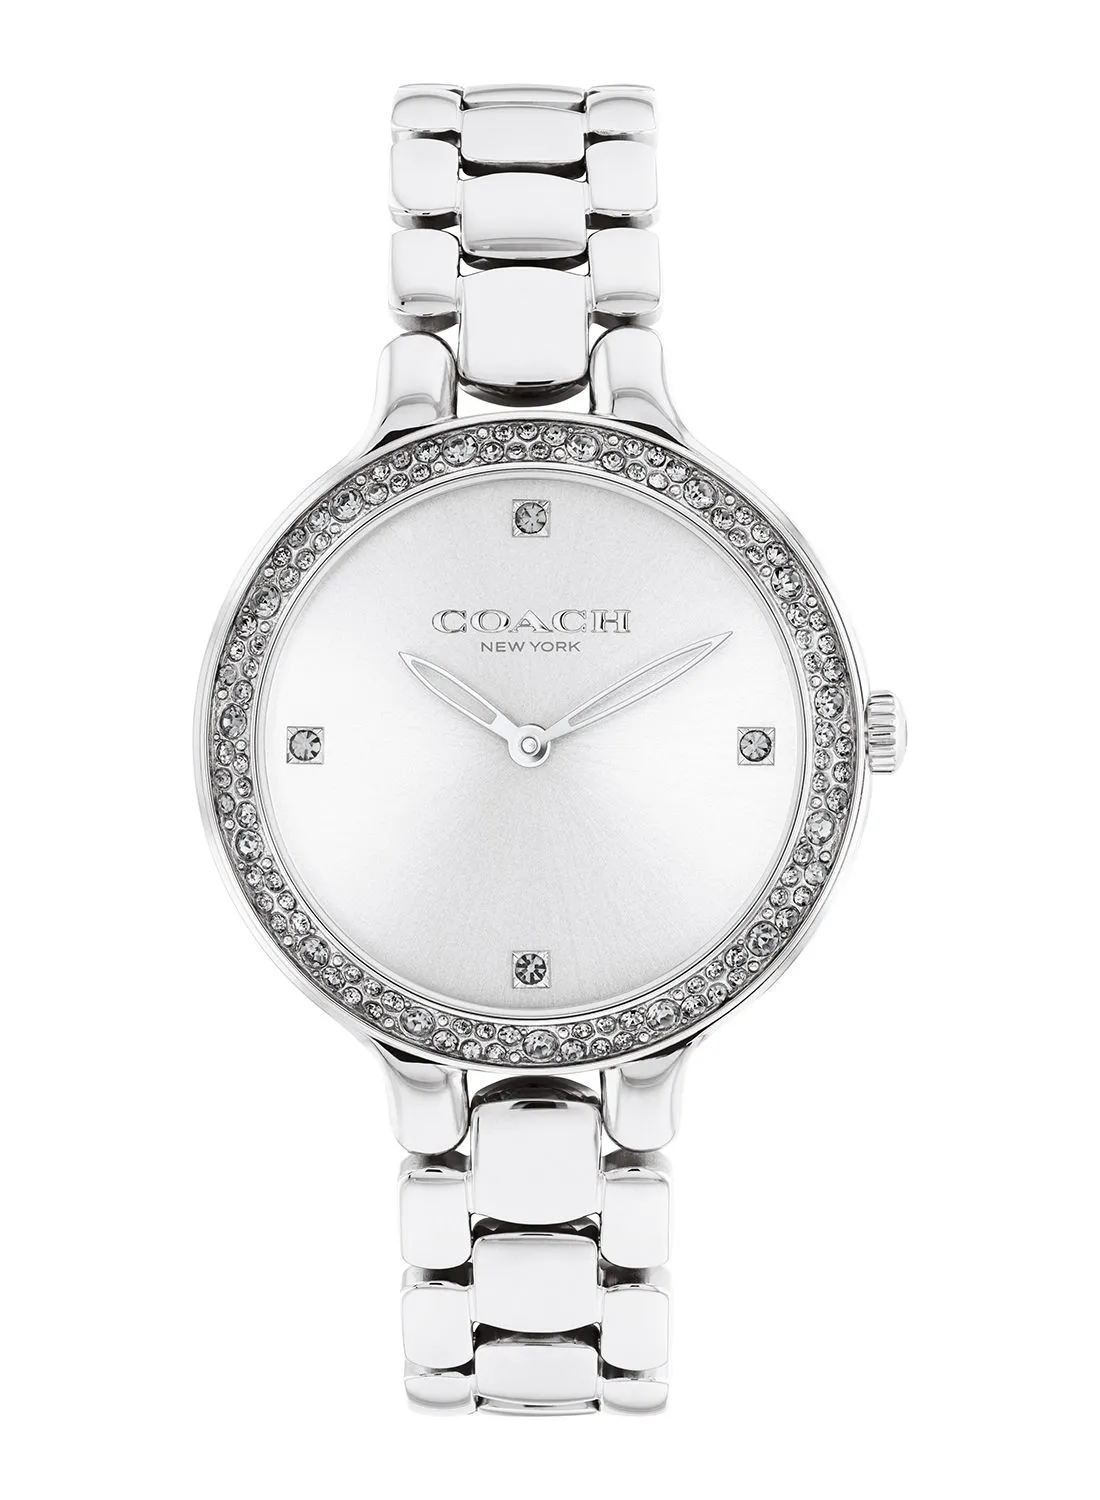 COACH Women's Analog Round Stainless Steel Wrist Watch 14504124 - 32 mm